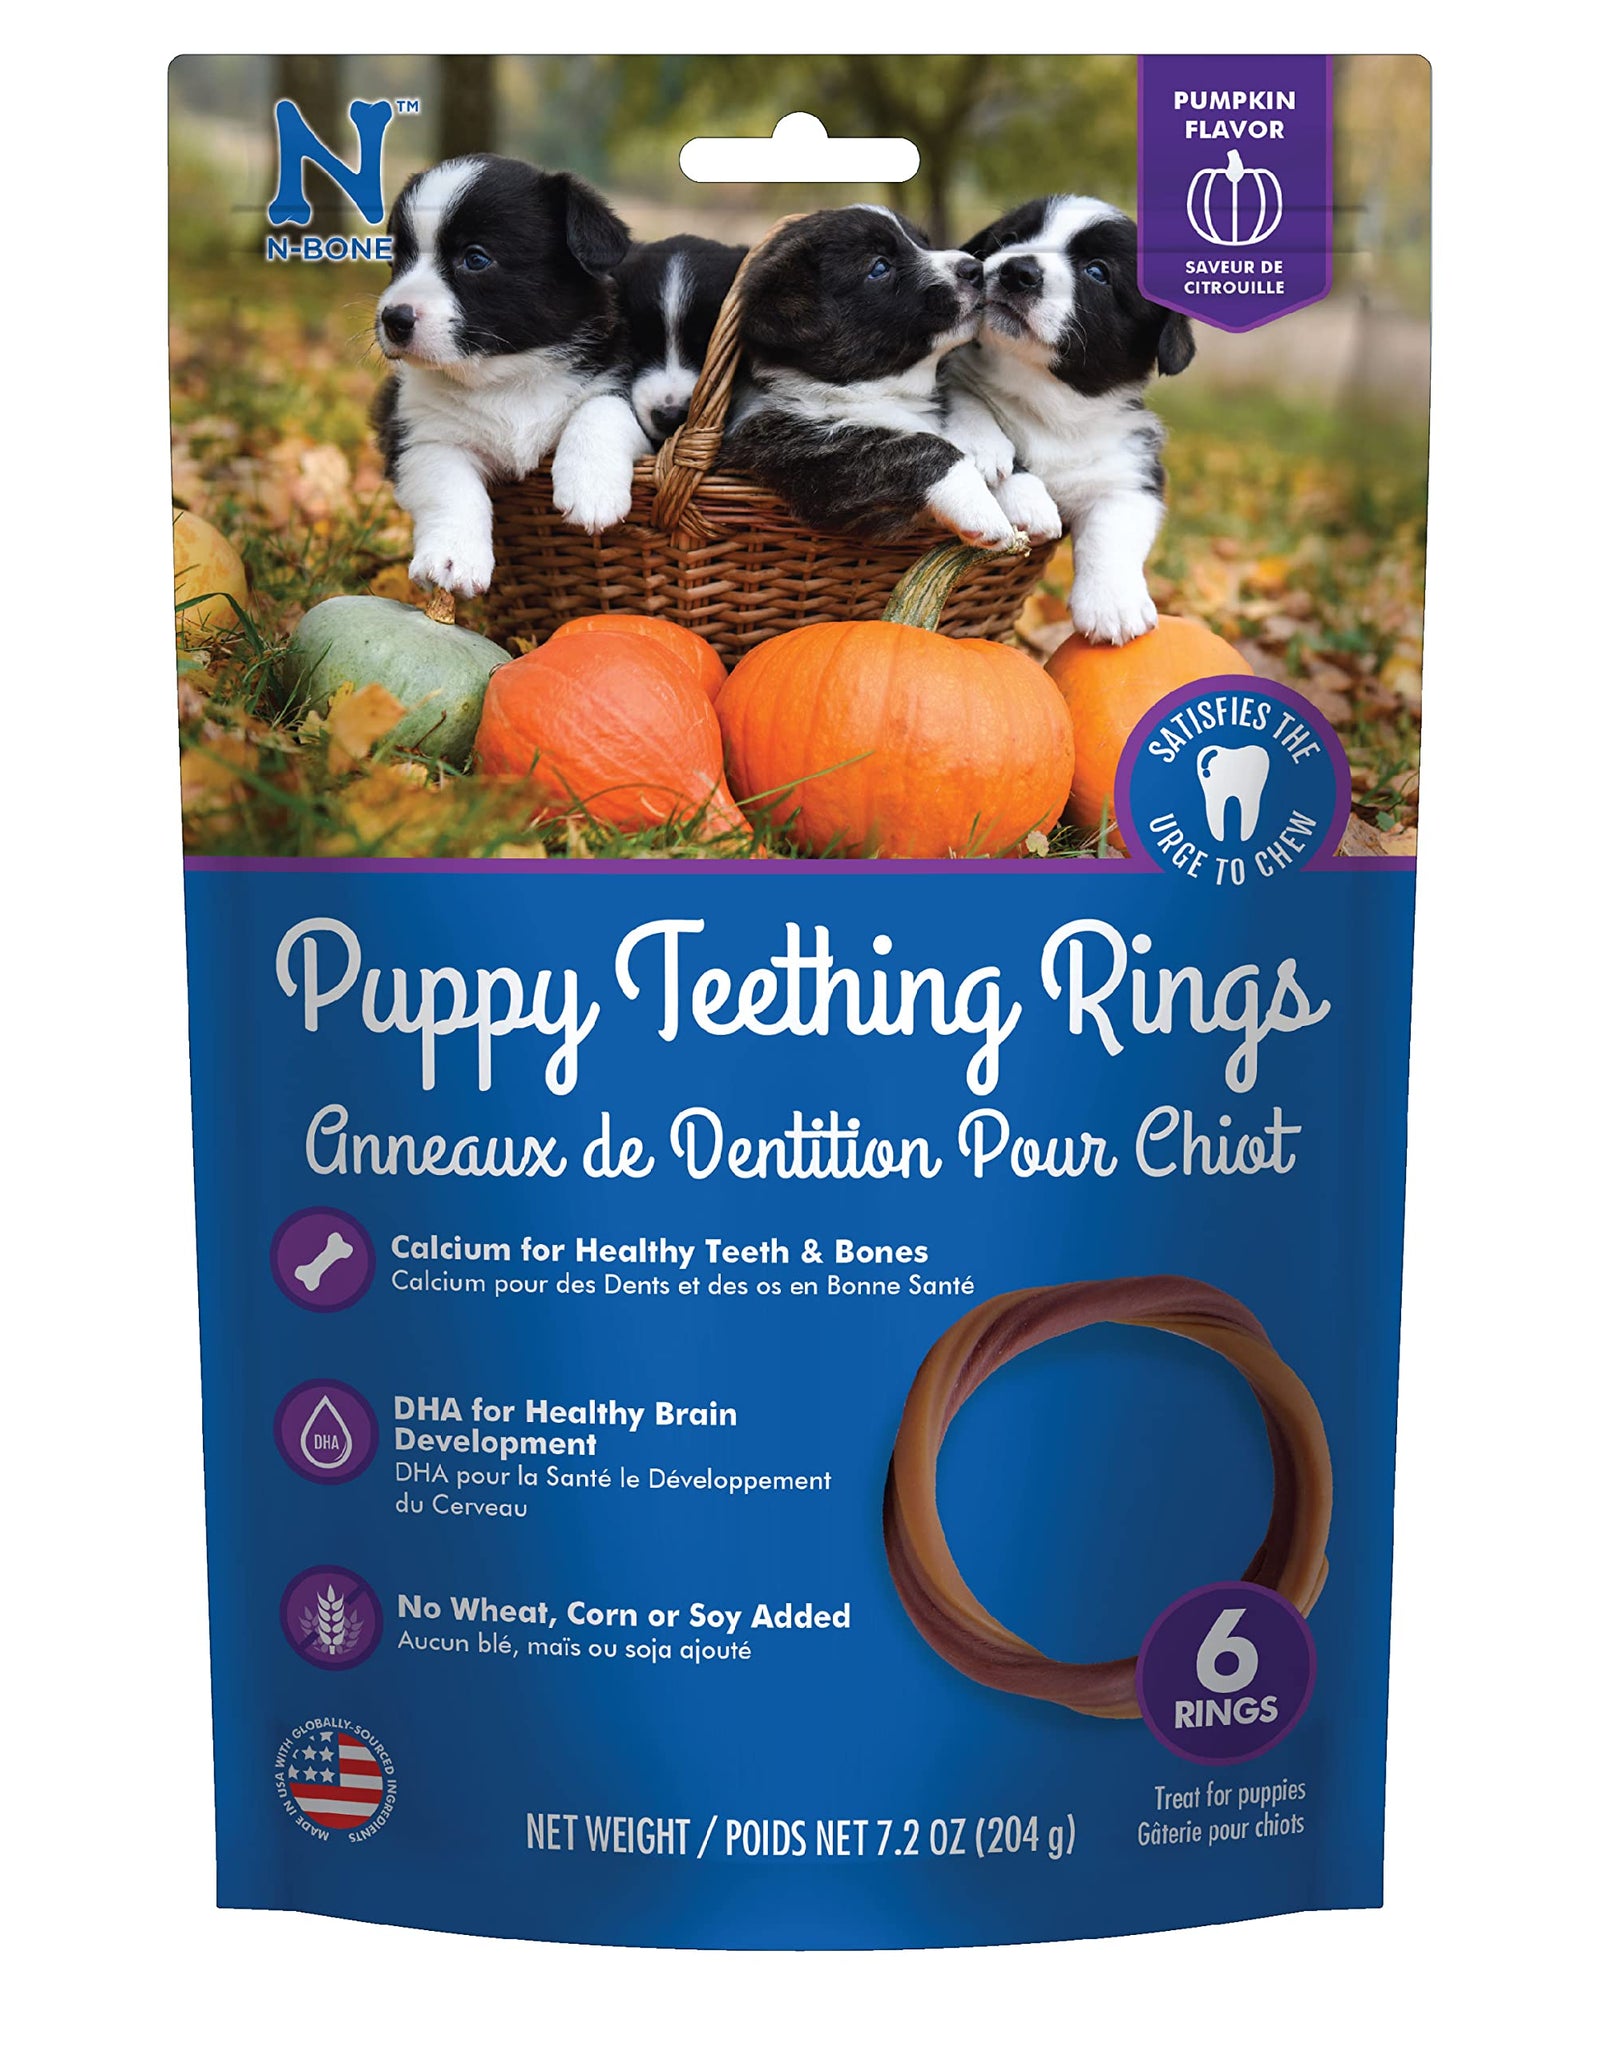 N-Bone Puppy Teething Ring Pumpkin Flavor 7.2 Oz/(6 Count)